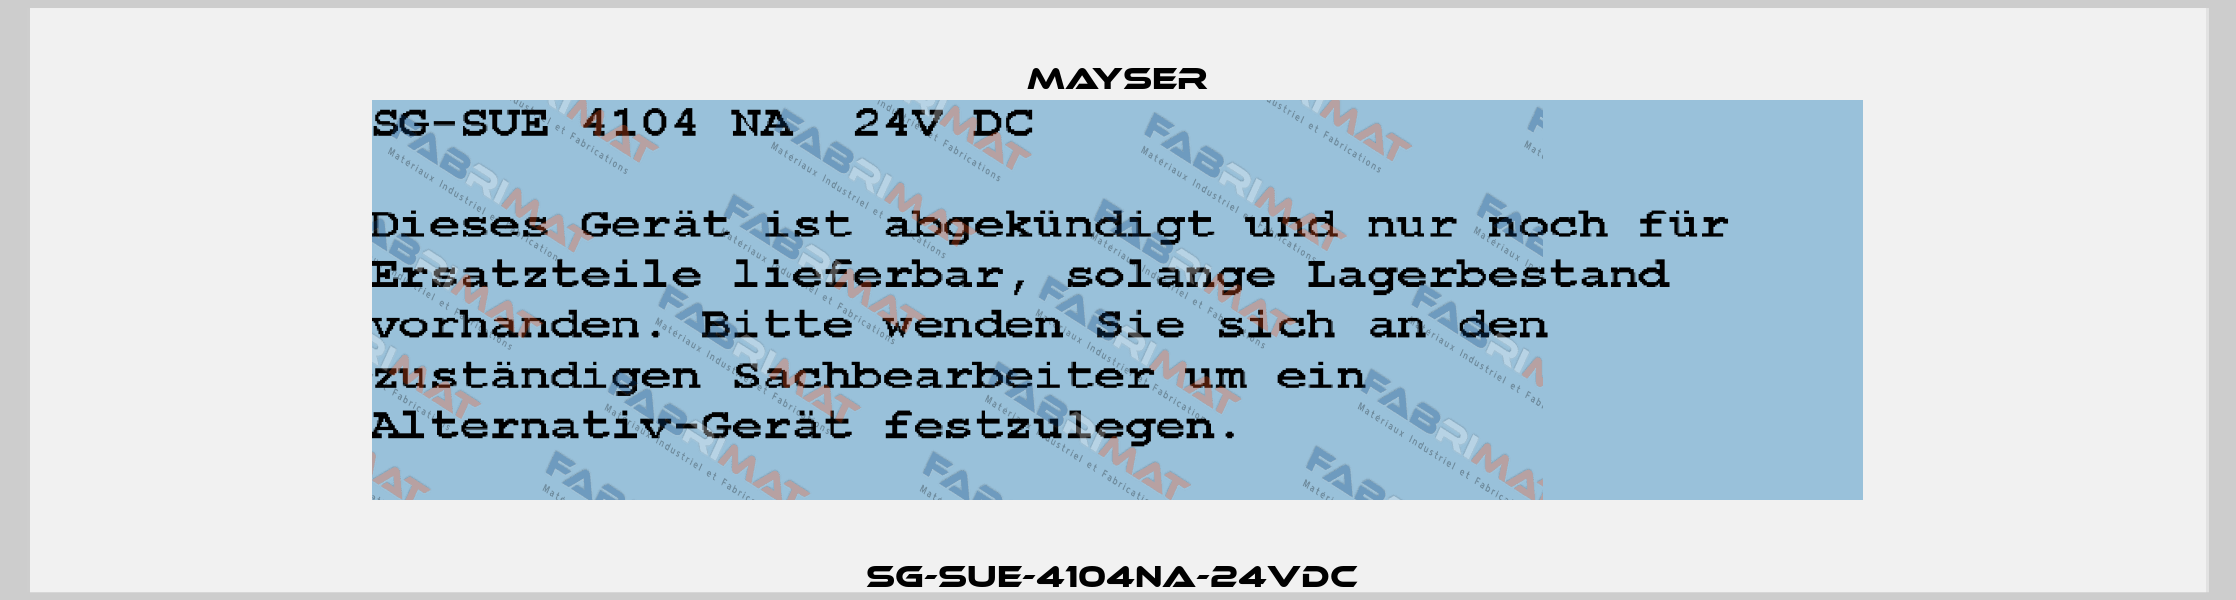 SG-SUE-4104NA-24VDC  Mayser